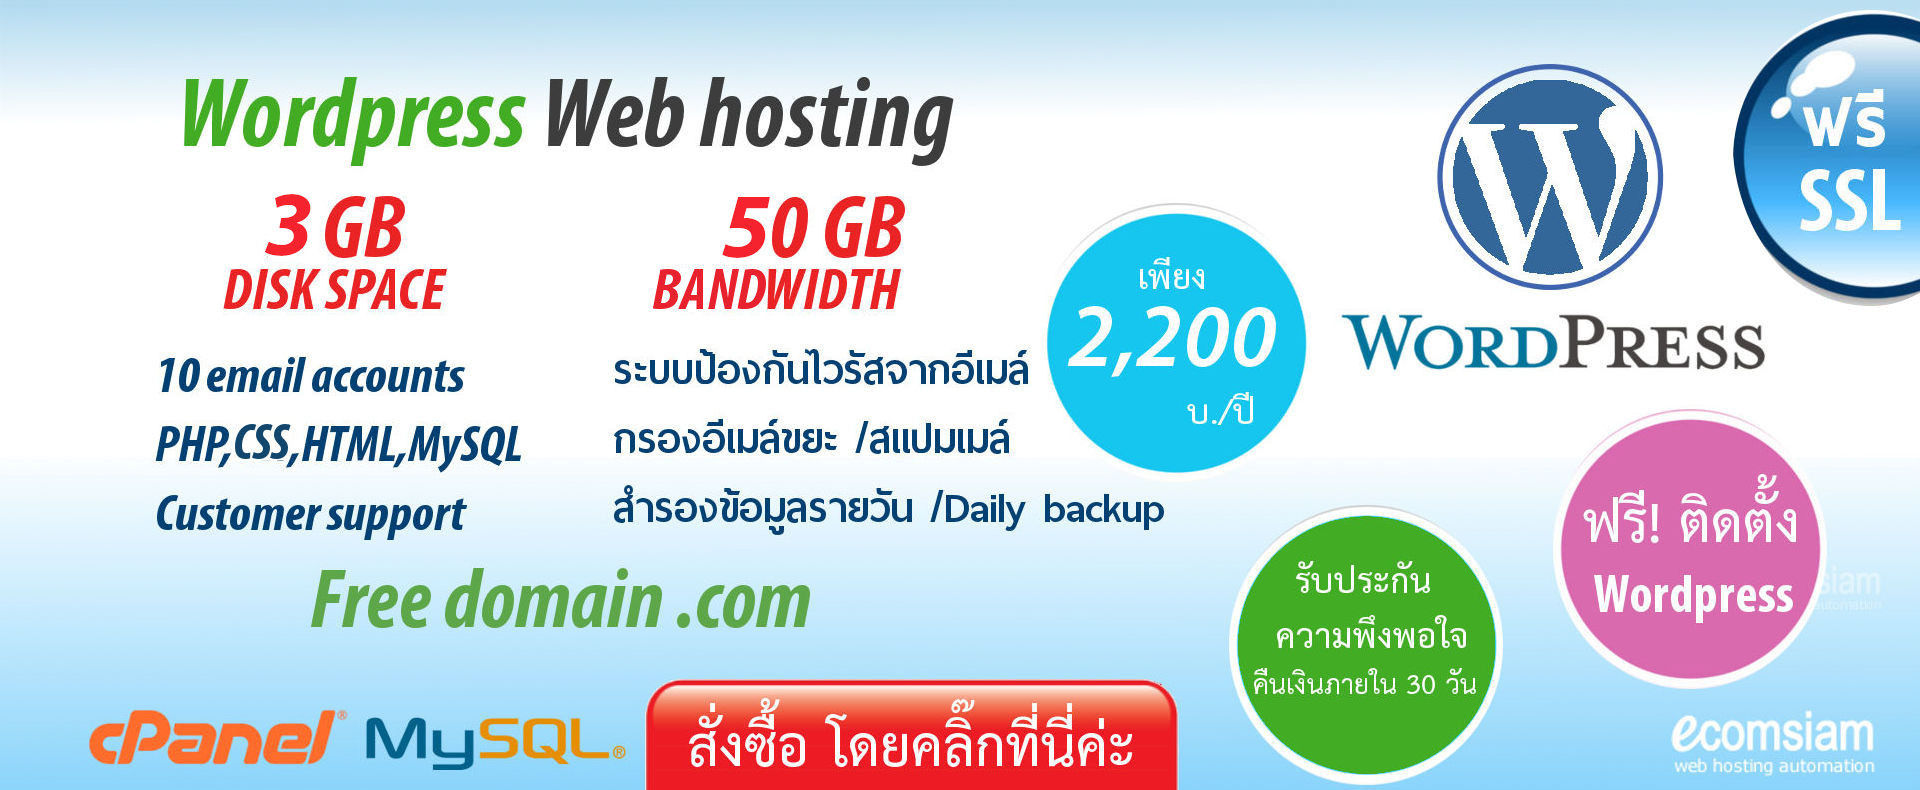 wordpress-web-hosting-thailand ฟรีโดเมน ฟรี SSL เว็บโฮสติ้งไทย ราคาเบาๆ เริ่มต้นเพียง 2200 บาทต่อปี บริการลูกค้า ดูแลดีโดย webhosting.com.co.th